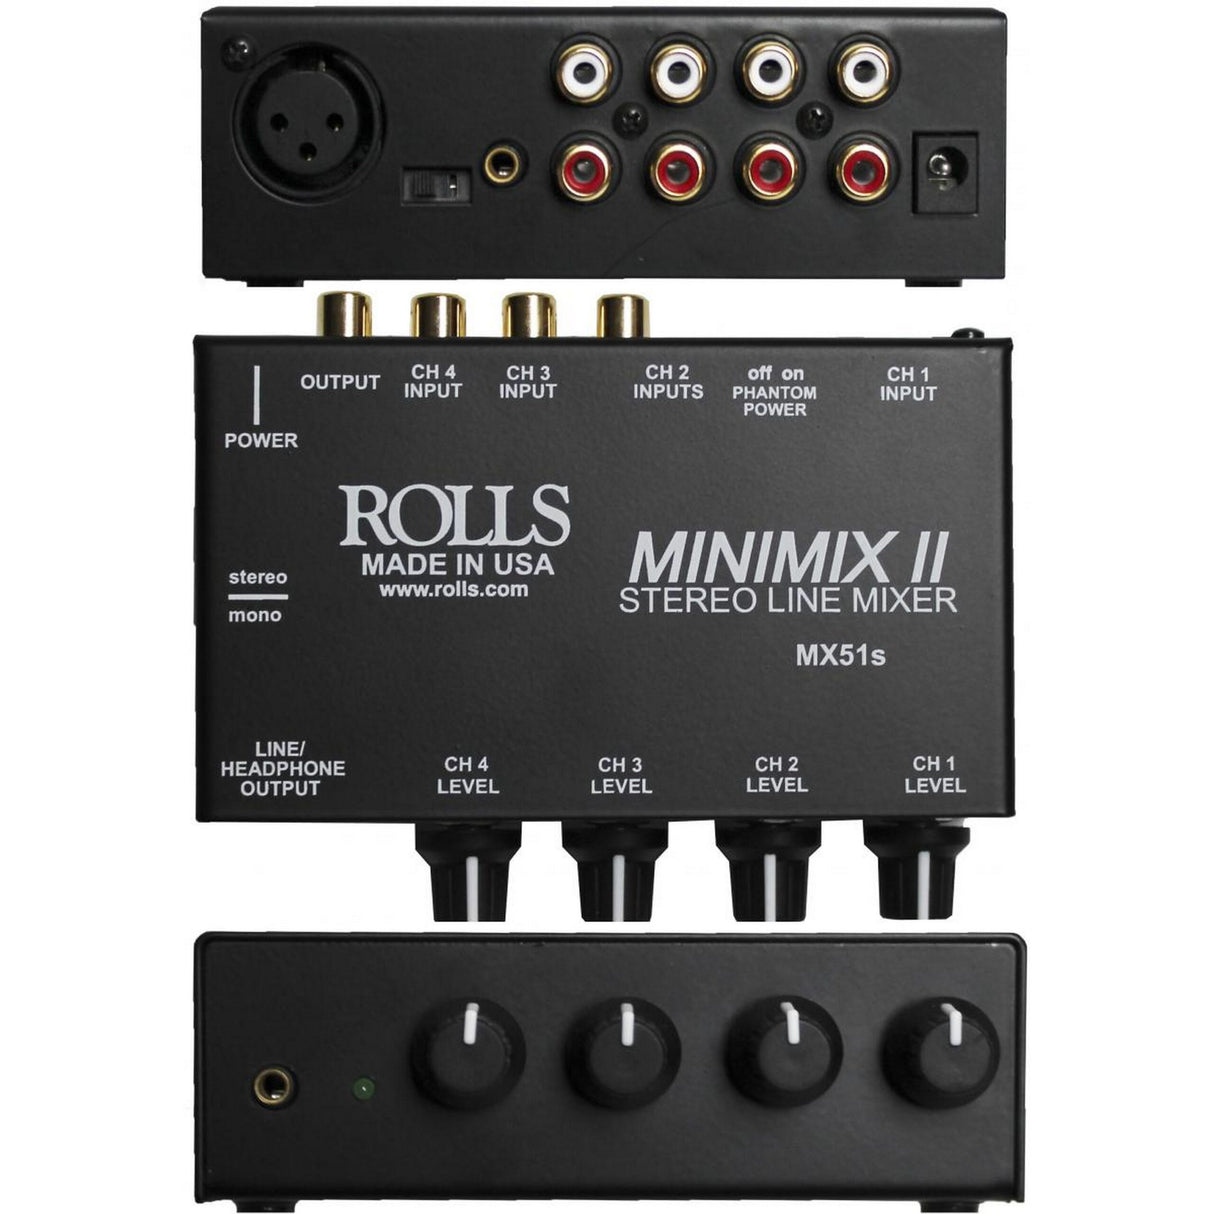 Rolls MX51s Mini Mix 2 Four Channel RCA Mixer